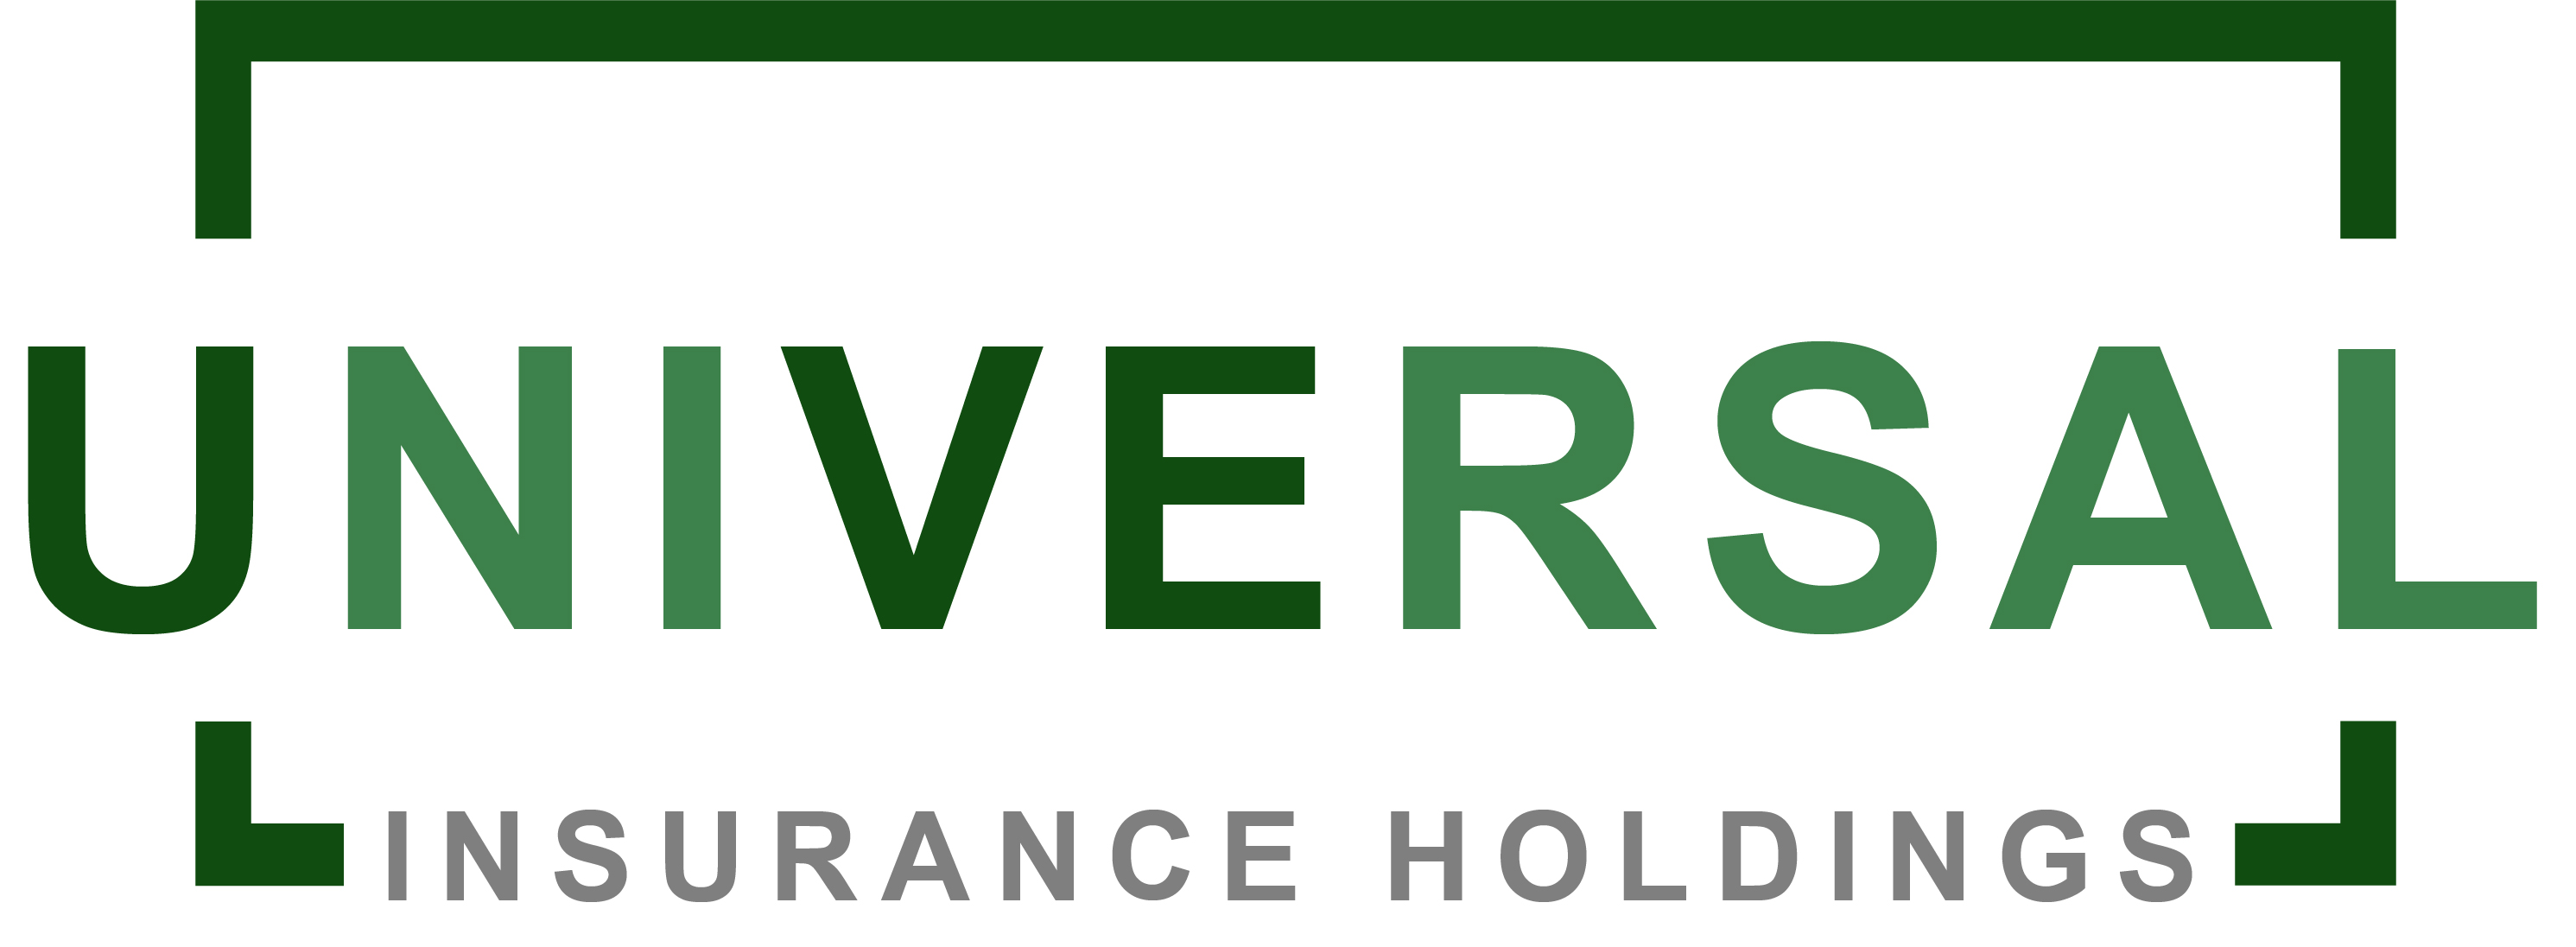 universal insurance holdings logo